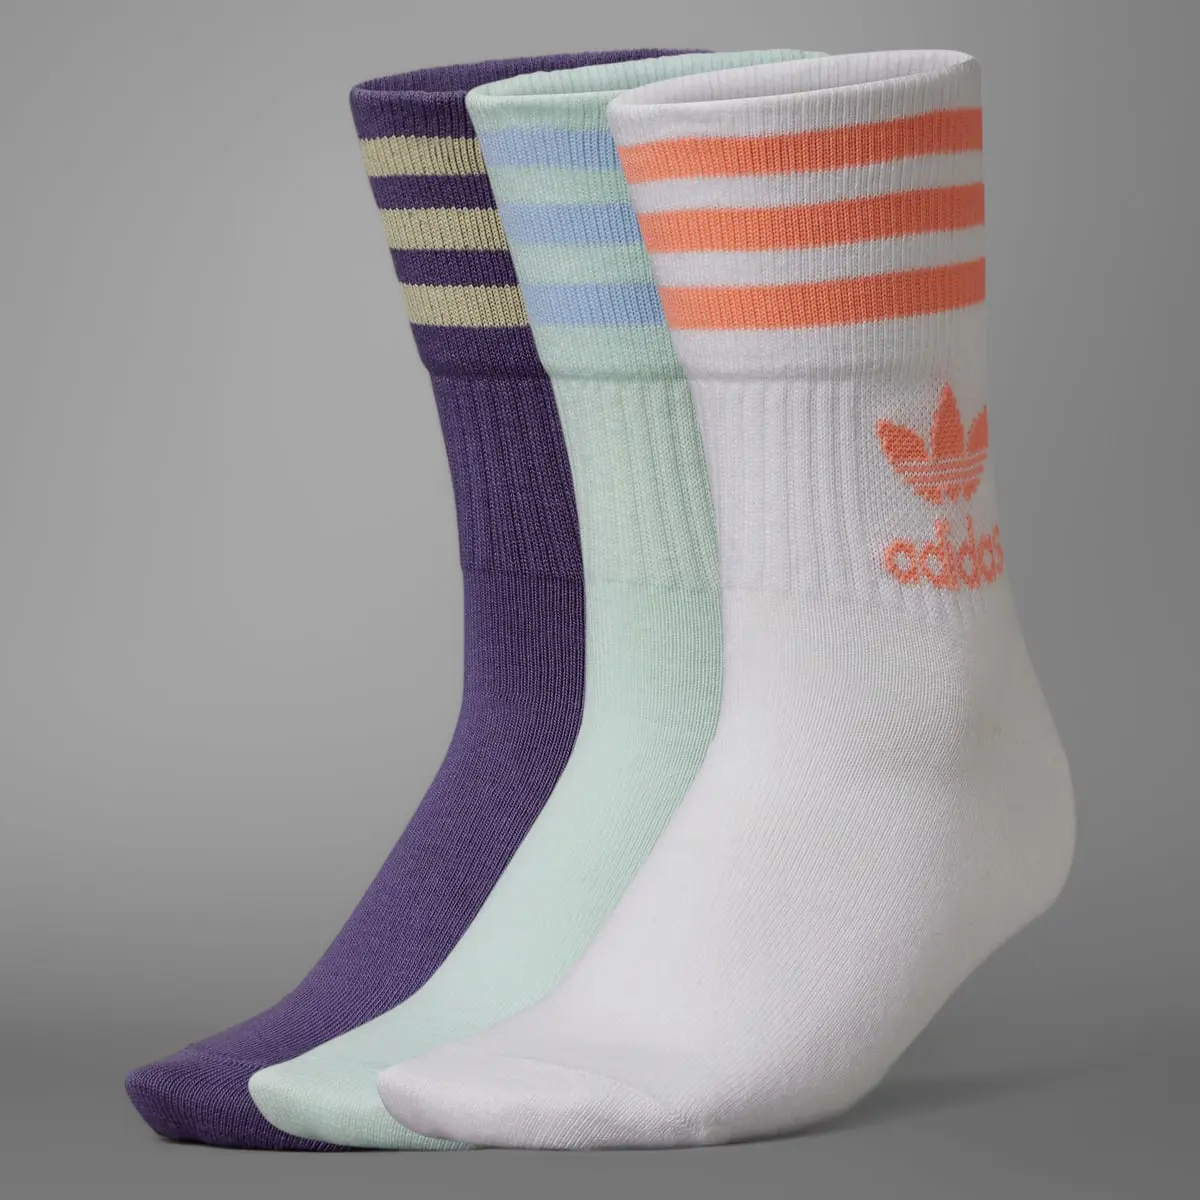 Adidas Enjoy Summer Mid Cut Crew Socks 3 Pairs. 1